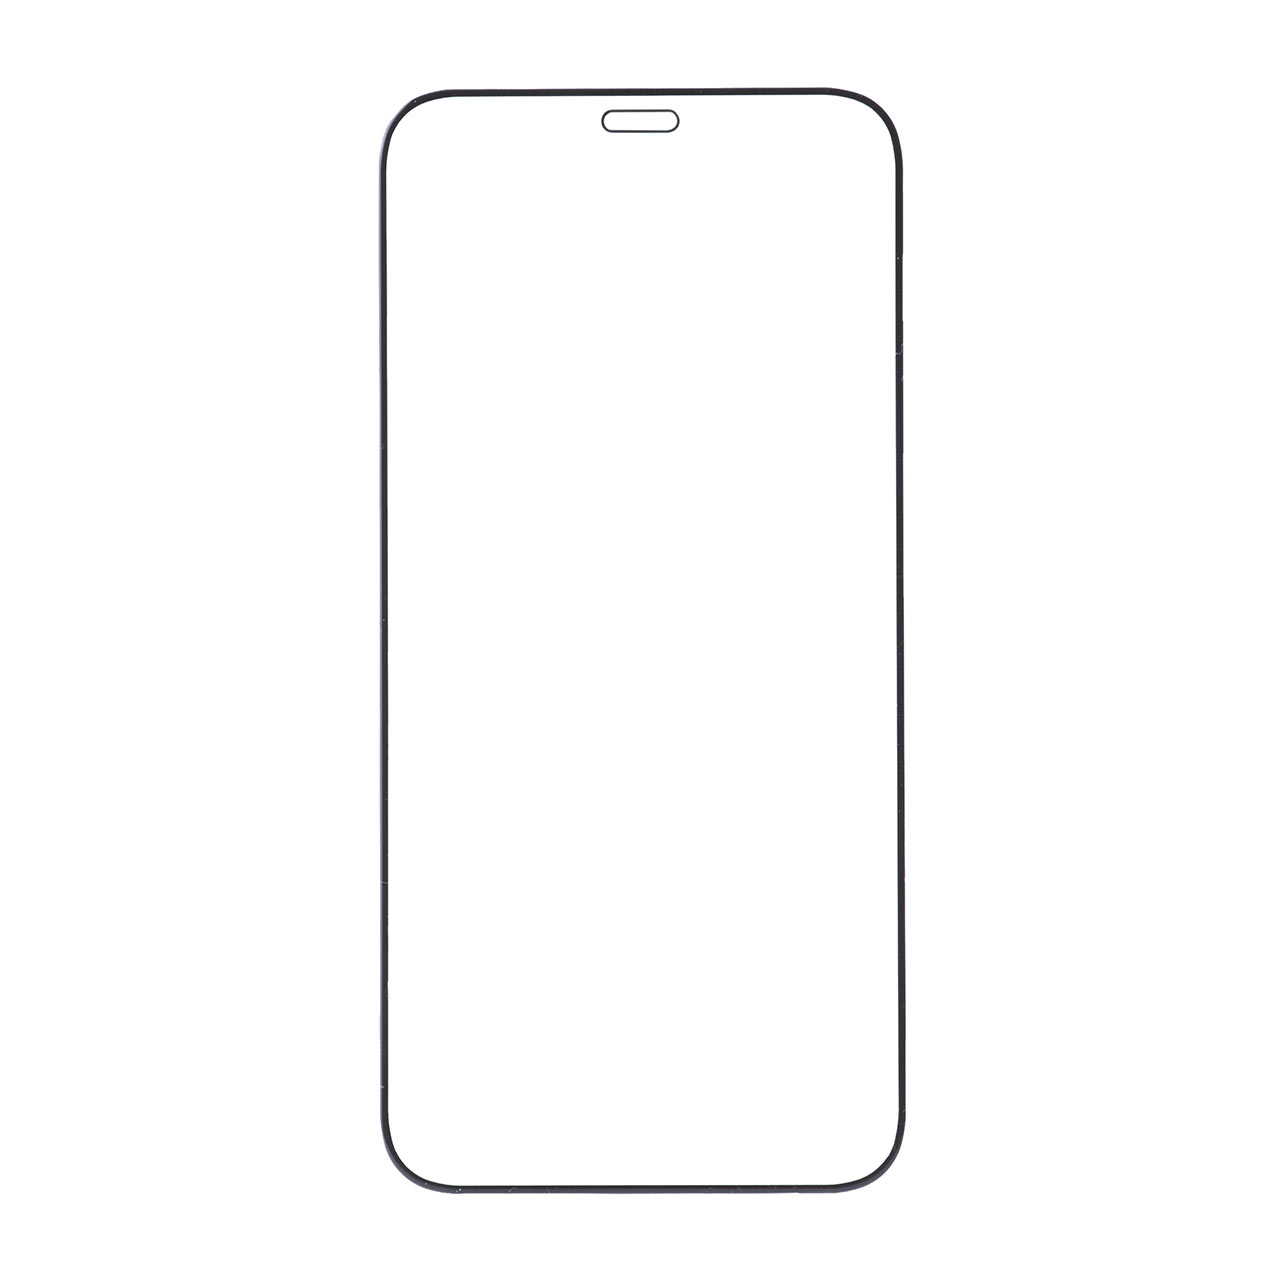 iPhone12 miniKXtB(CJBeΉEdx9HEEh`EA^b`gtEubNj 200-LCD060